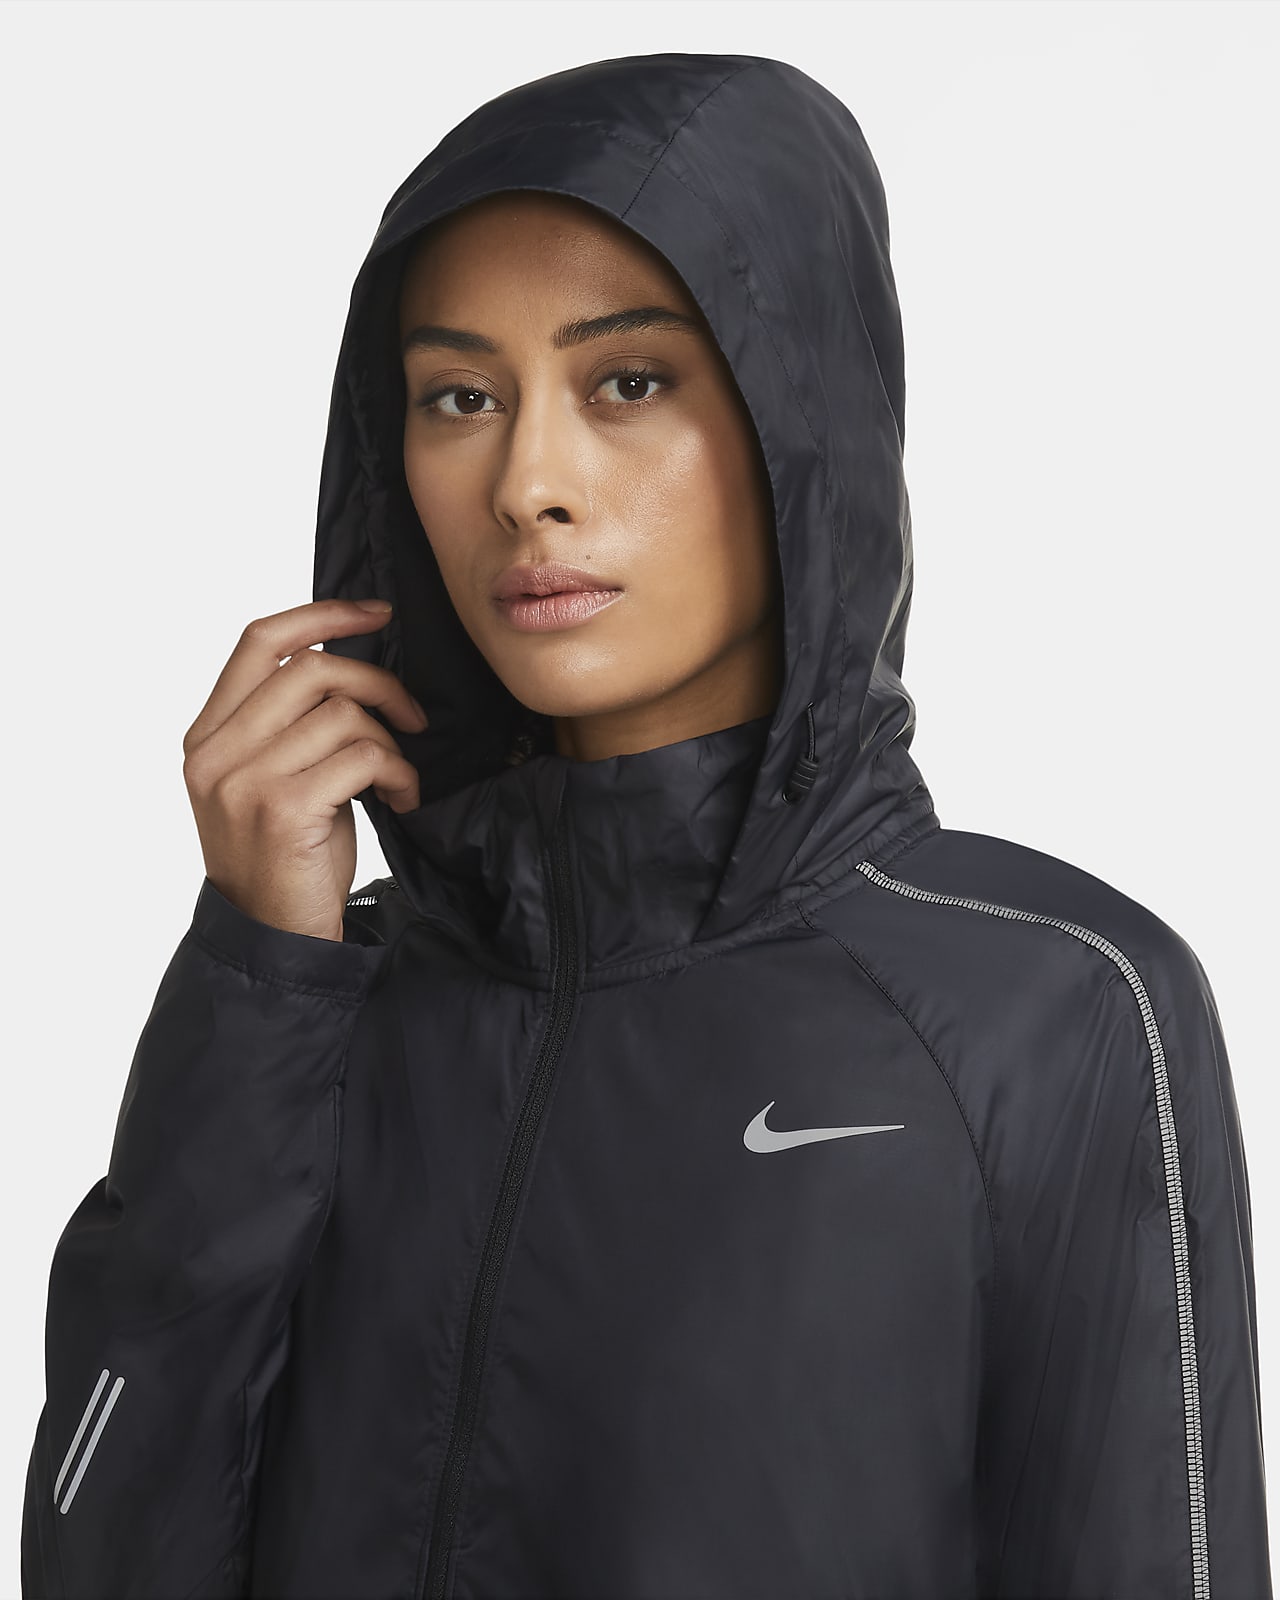 Nike Hypershield Running Jacket | peacecommission.kdsg.gov.ng